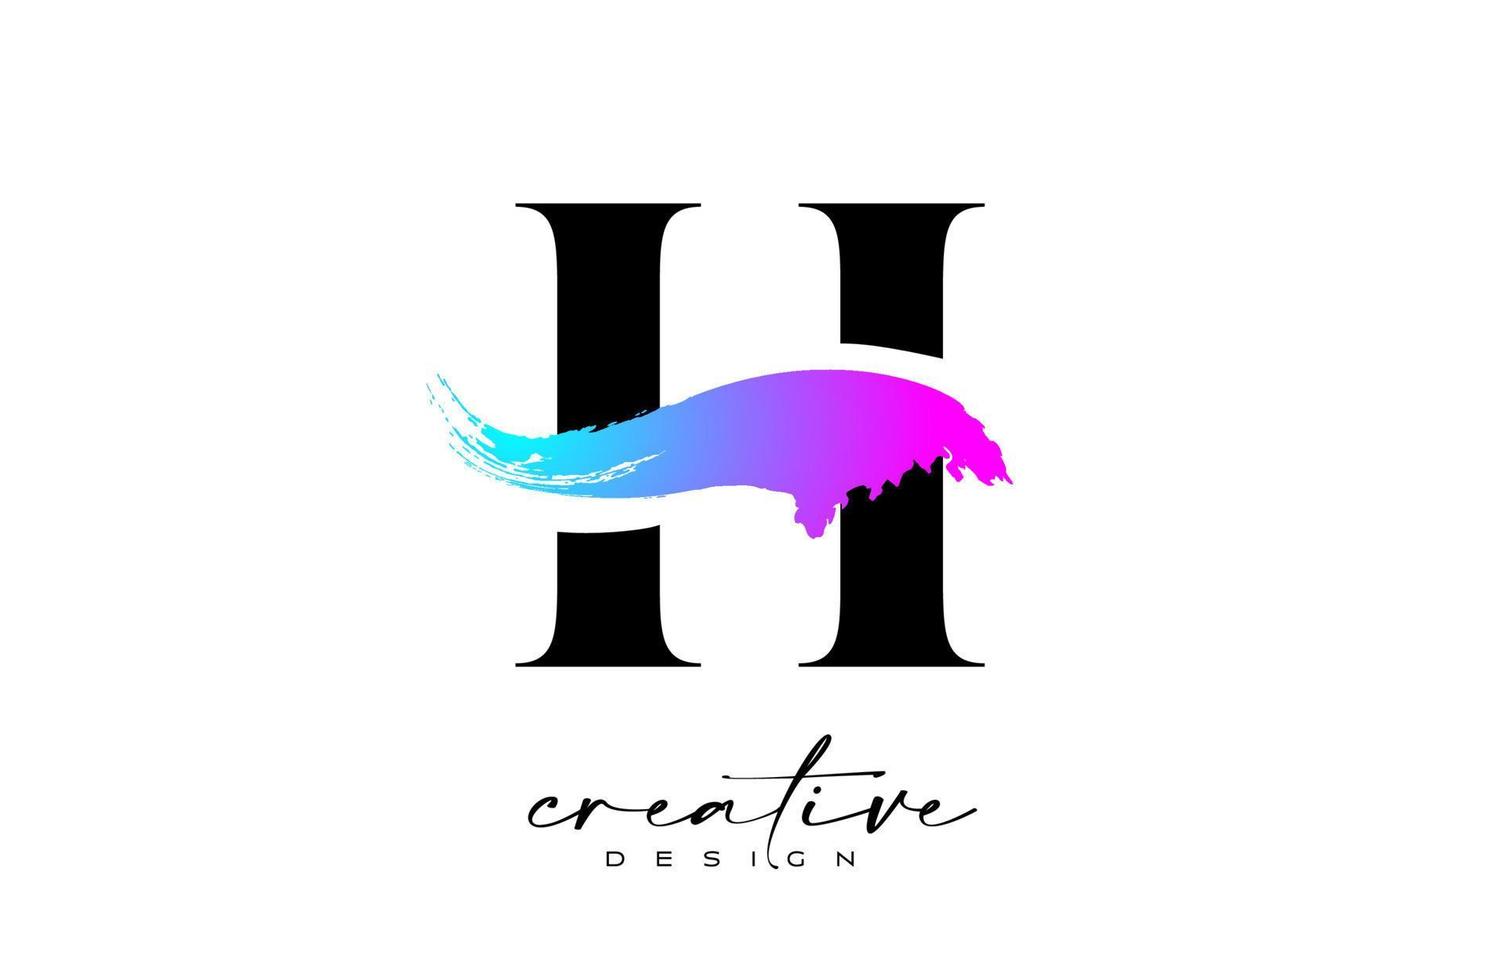 Brush Stroke Letter H logo desgn with Artistic Colorful Blue Purple Paintbrush Stroke Vector